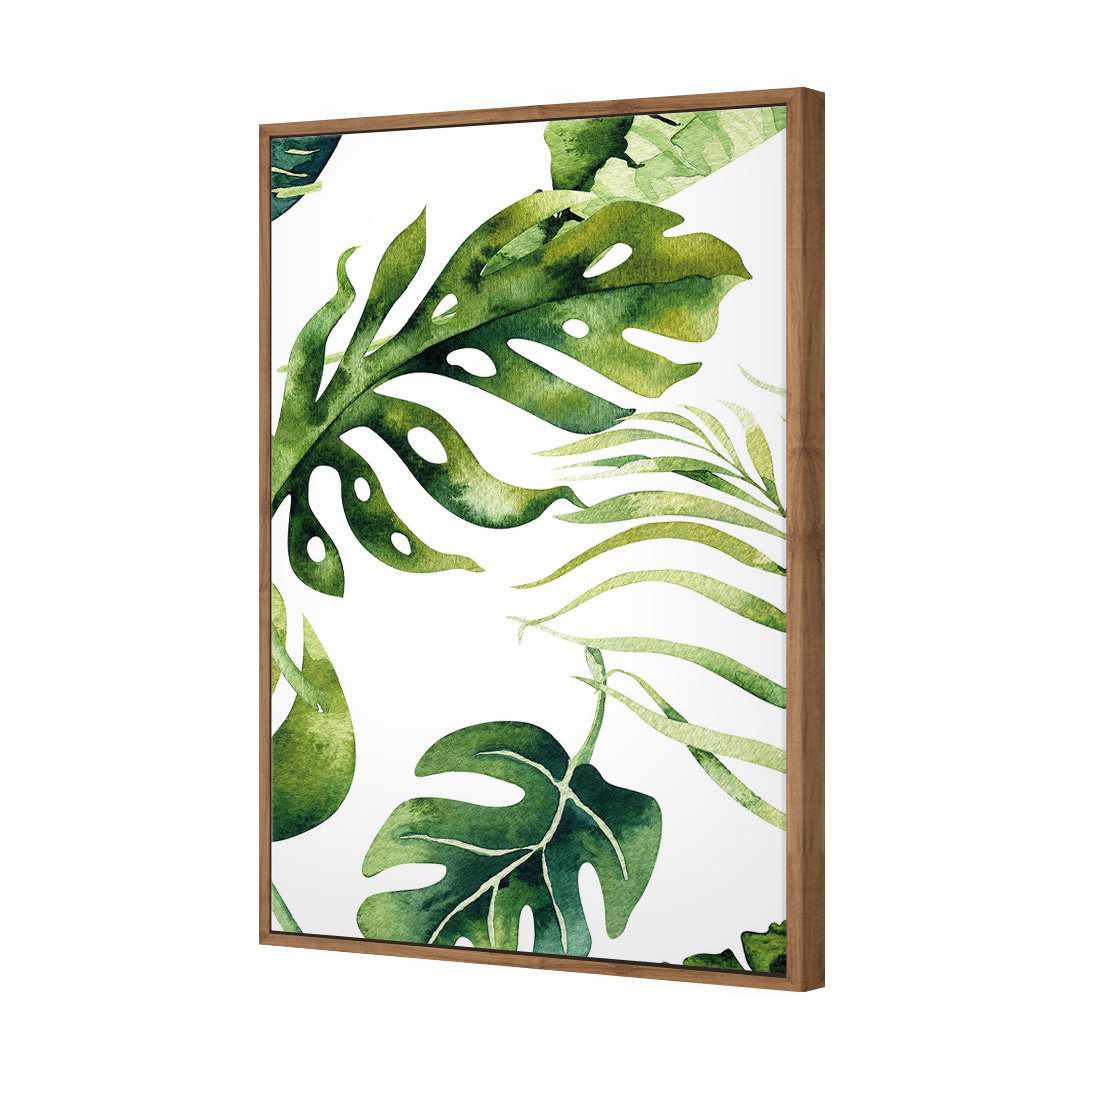 Fascinating Foliage Version 01 Canvas Art-Canvas-Wall Art Designs-45x30cm-Canvas - Natural Frame-Wall Art Designs